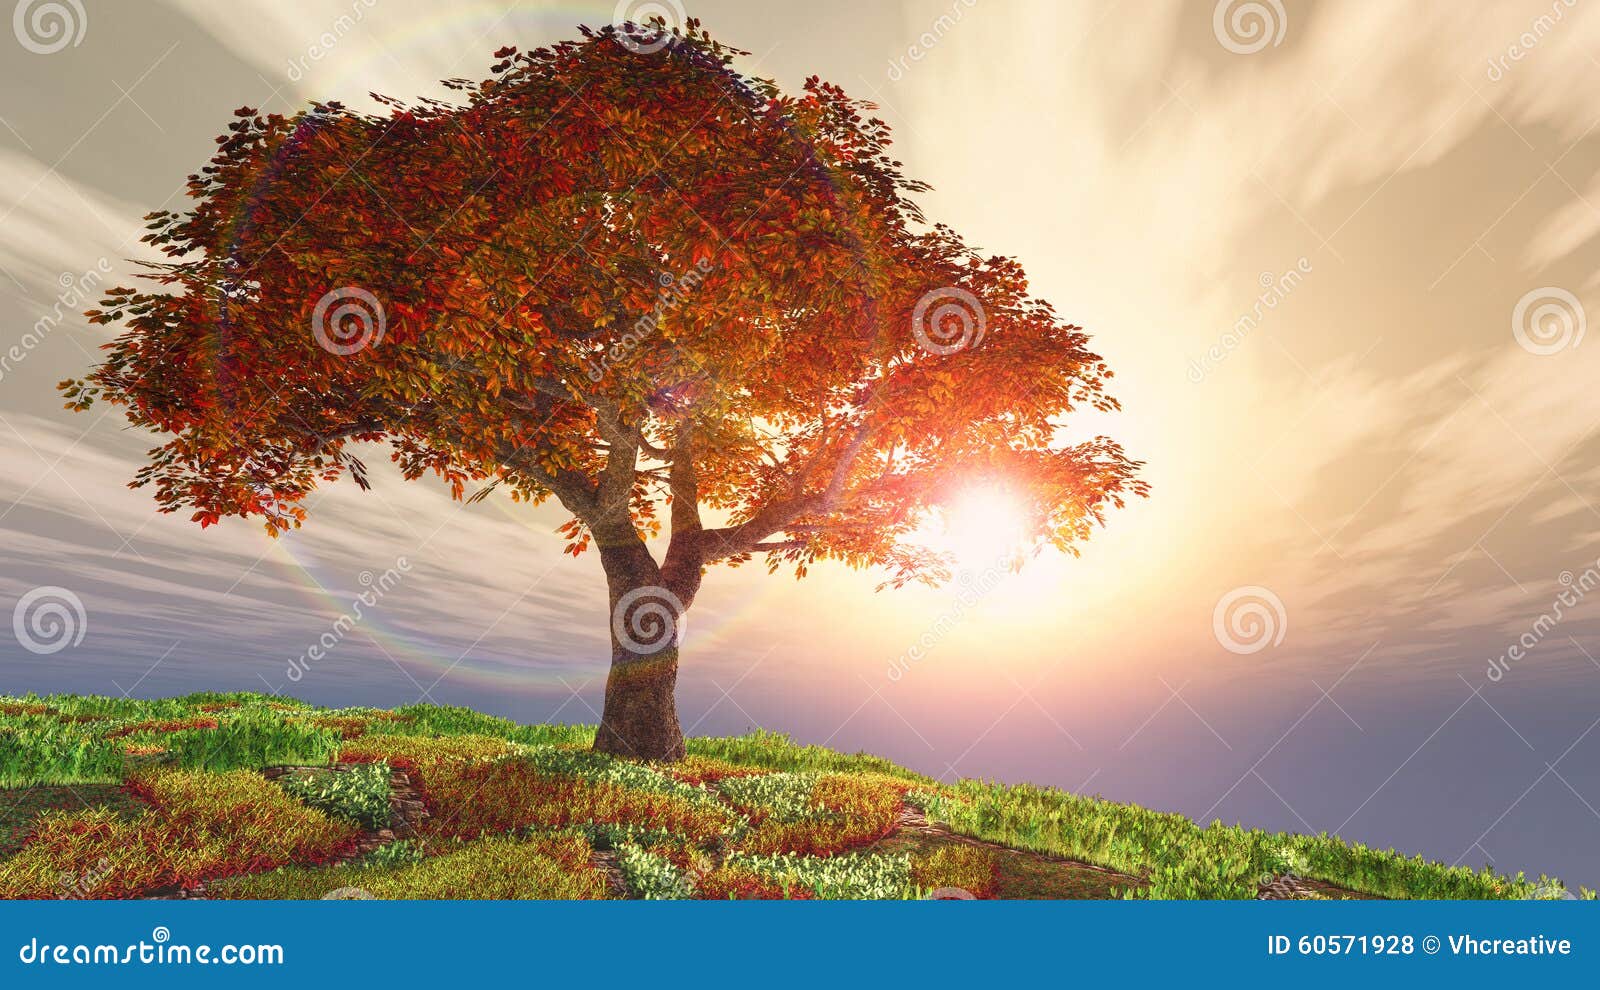 autumn cherry tree on hill against the sun